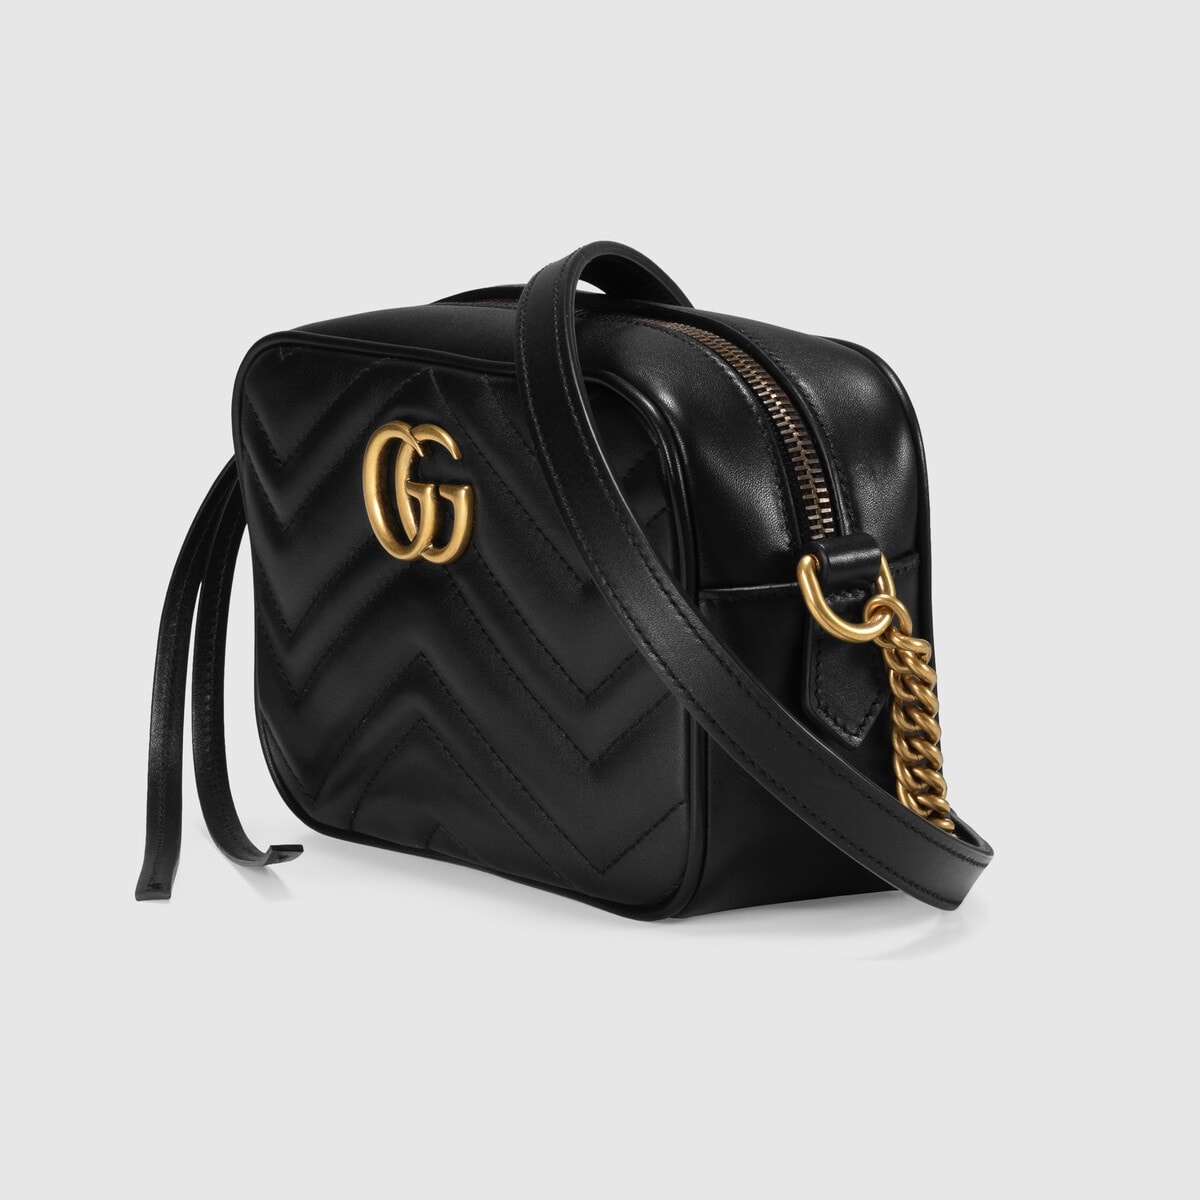 GG Marmont mini shoulder bag - 2